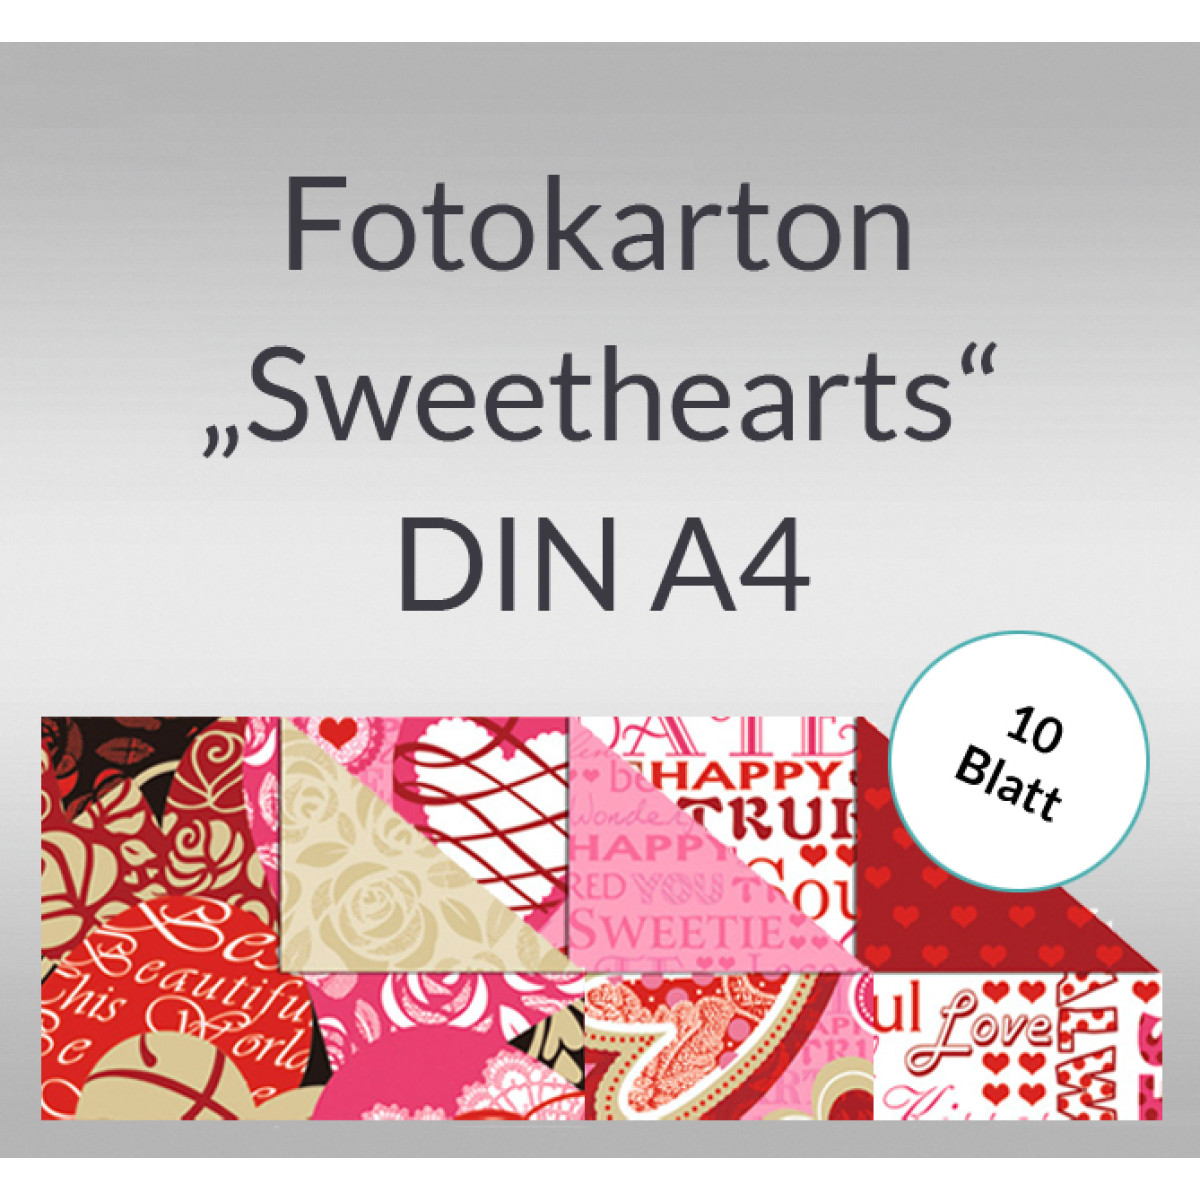 Fotokarton "Sweethearts" DIN A4 - 10 Blatt